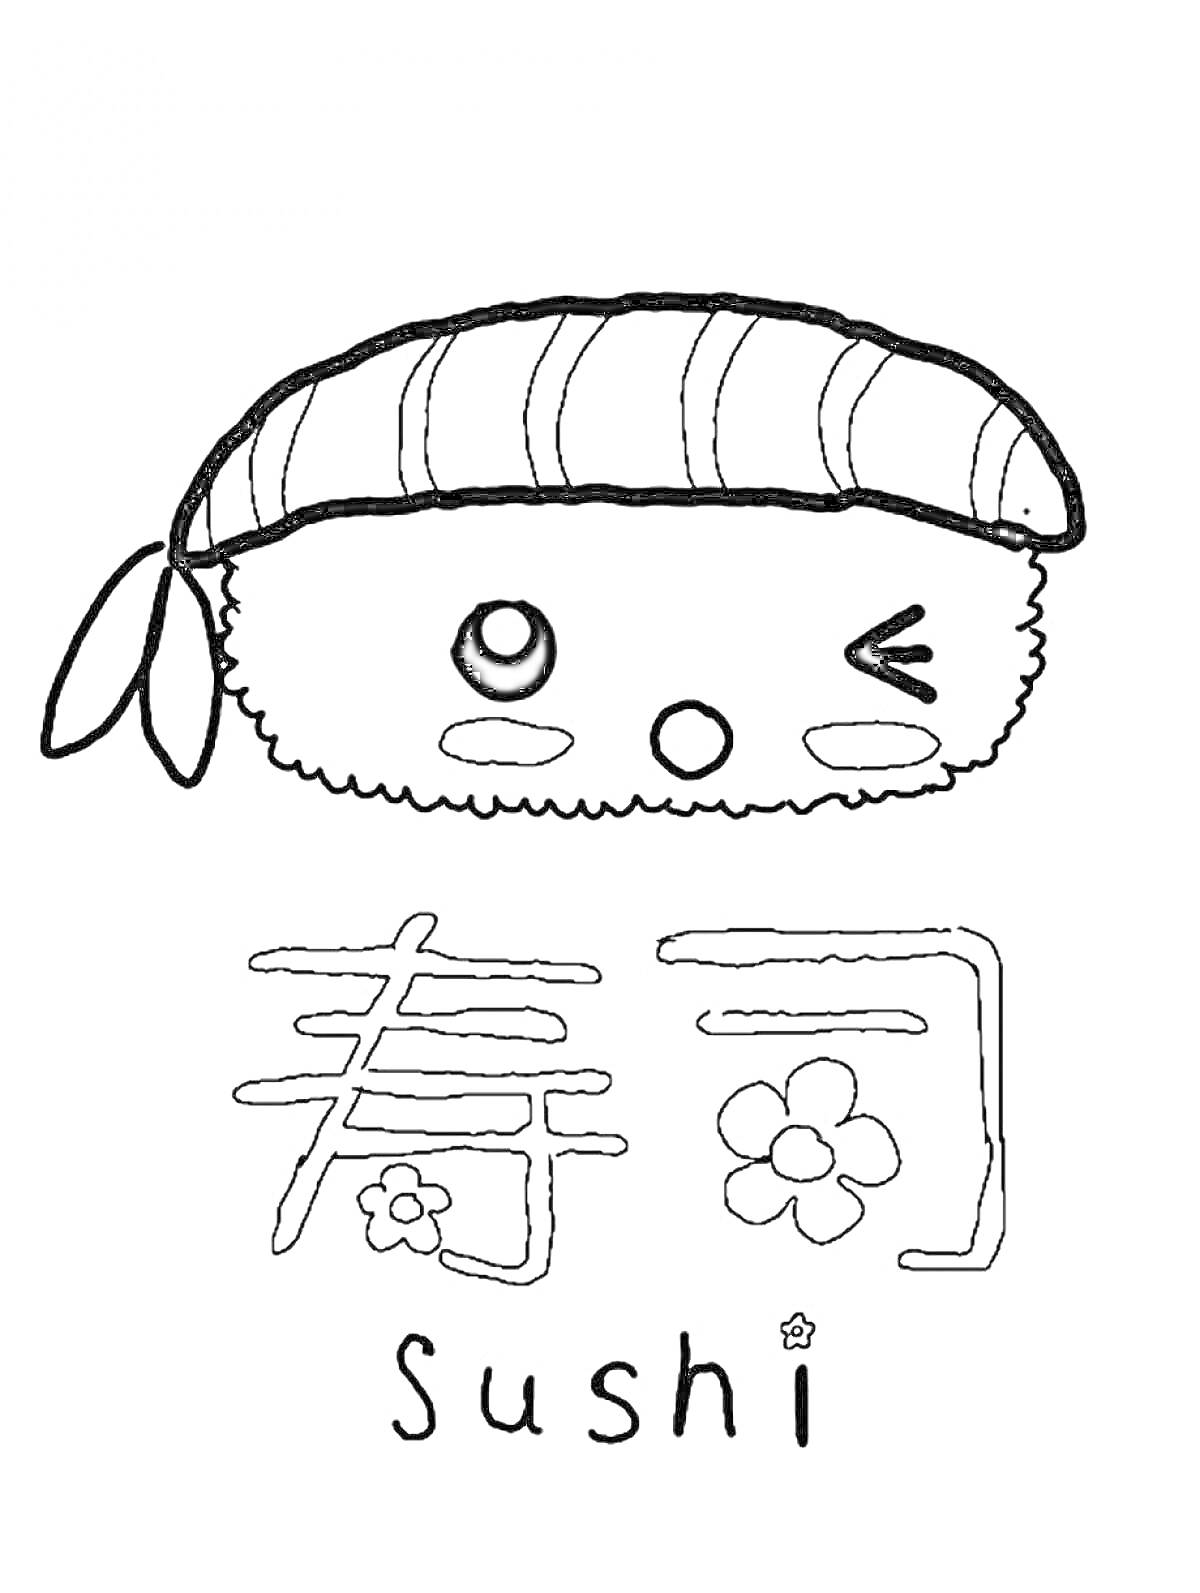 Раскраска Ролл с повязкой на голове, мордашкой, и надписями '寿司' и 'sushi'